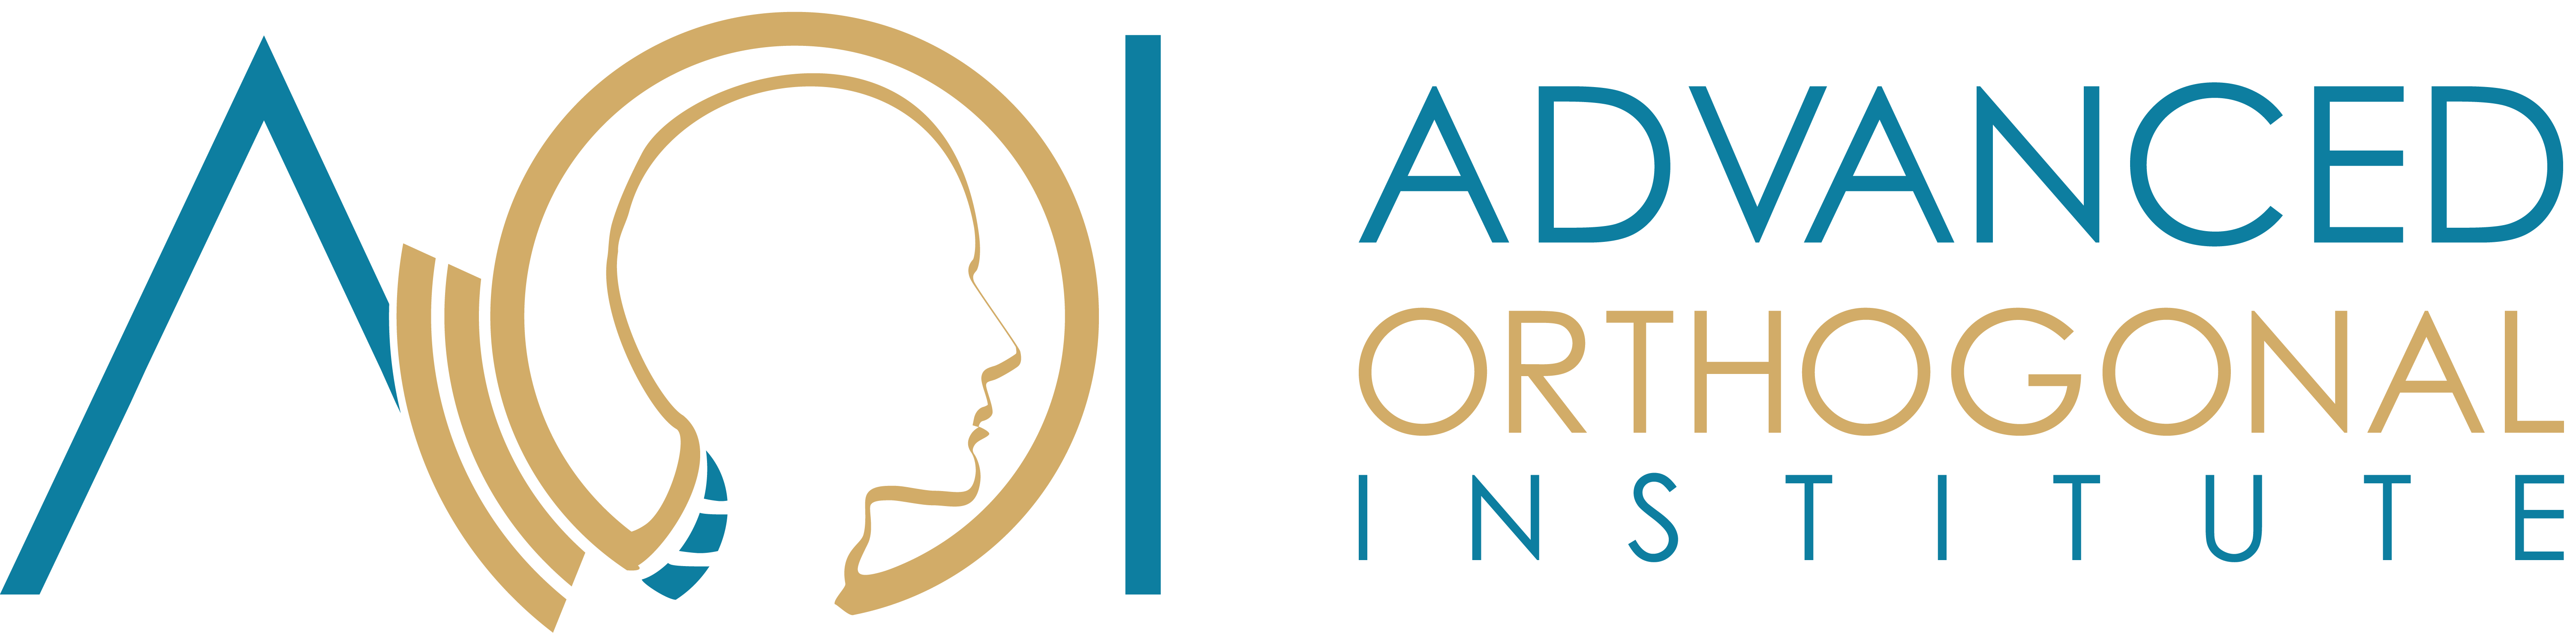 Advanced Orthogonal Institute logo